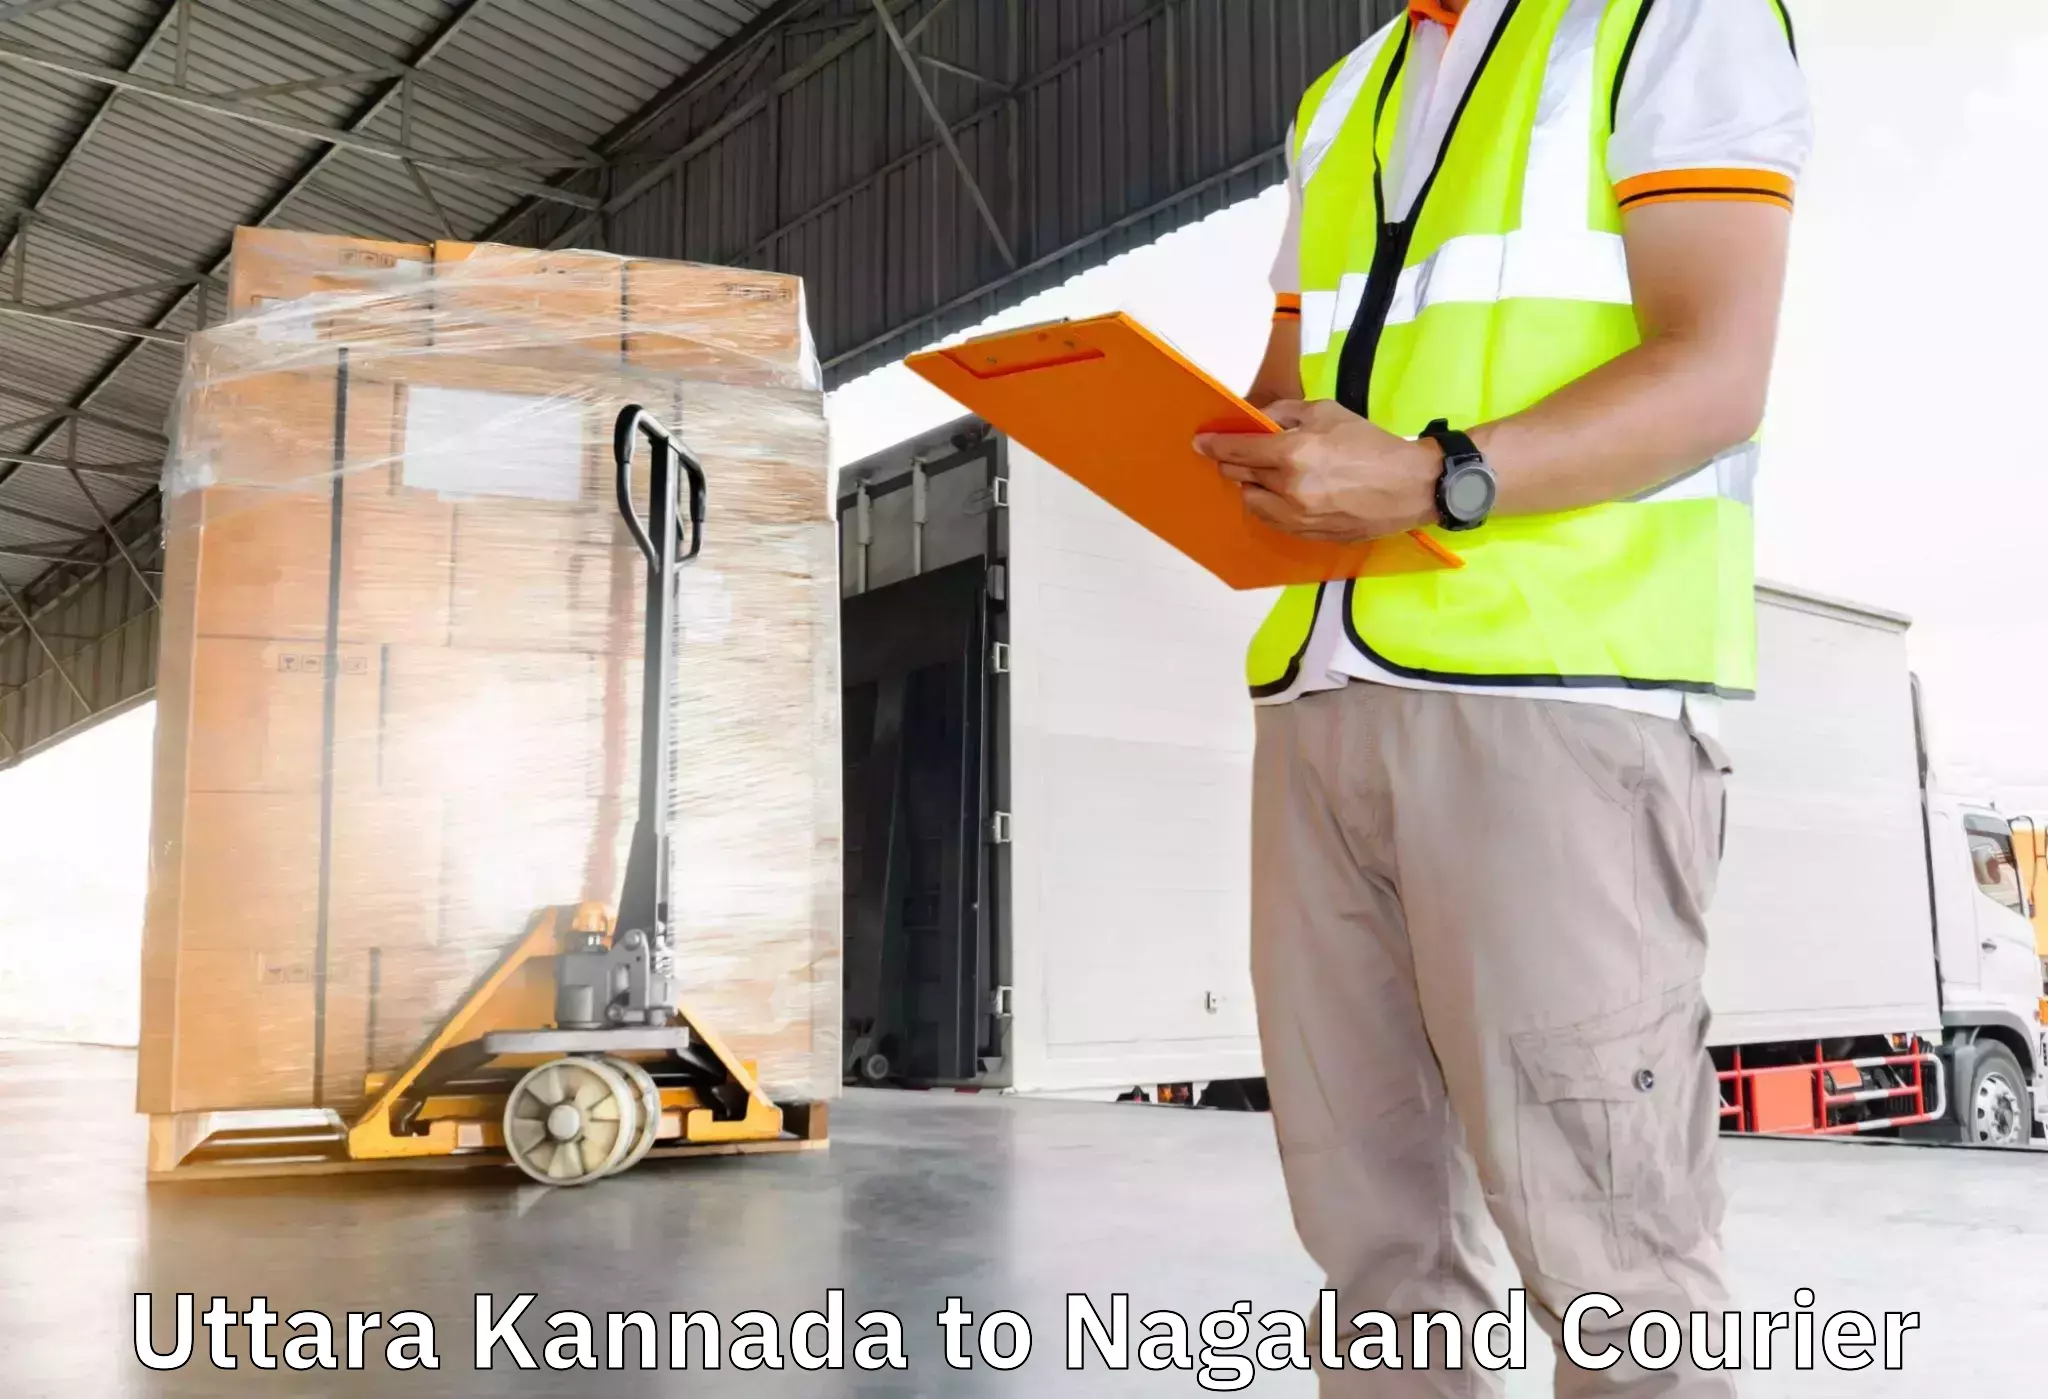 Furniture delivery service Uttara Kannada to Nagaland